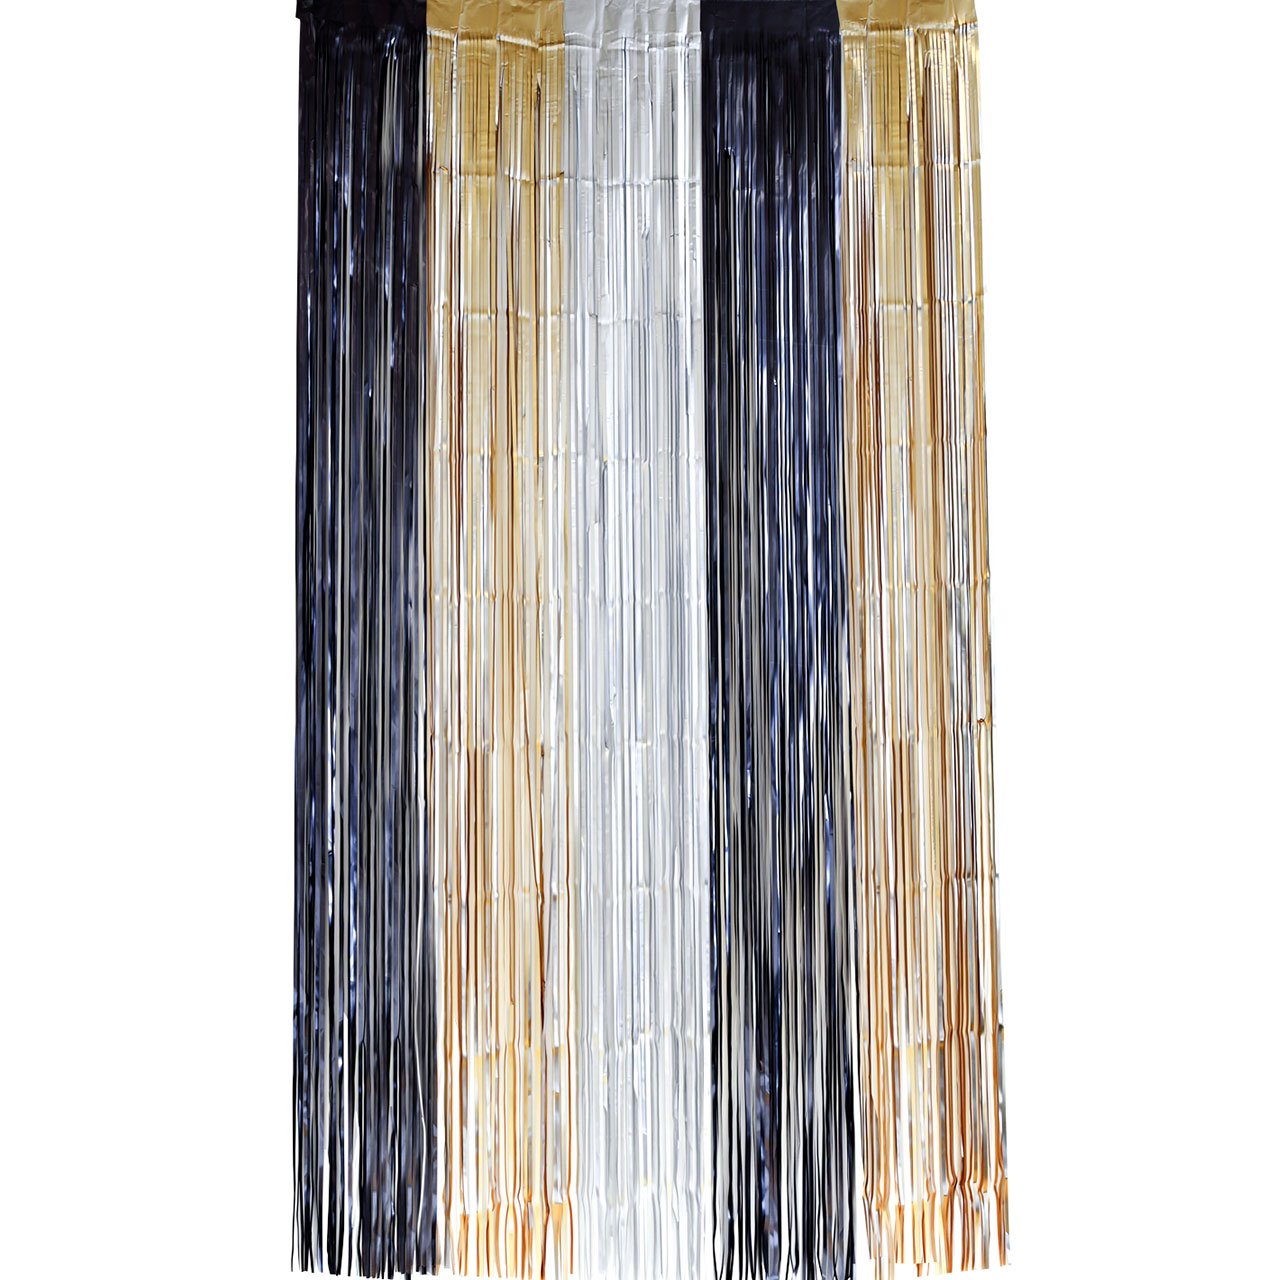  Foil Door Curtain - Black, Gold & Silver